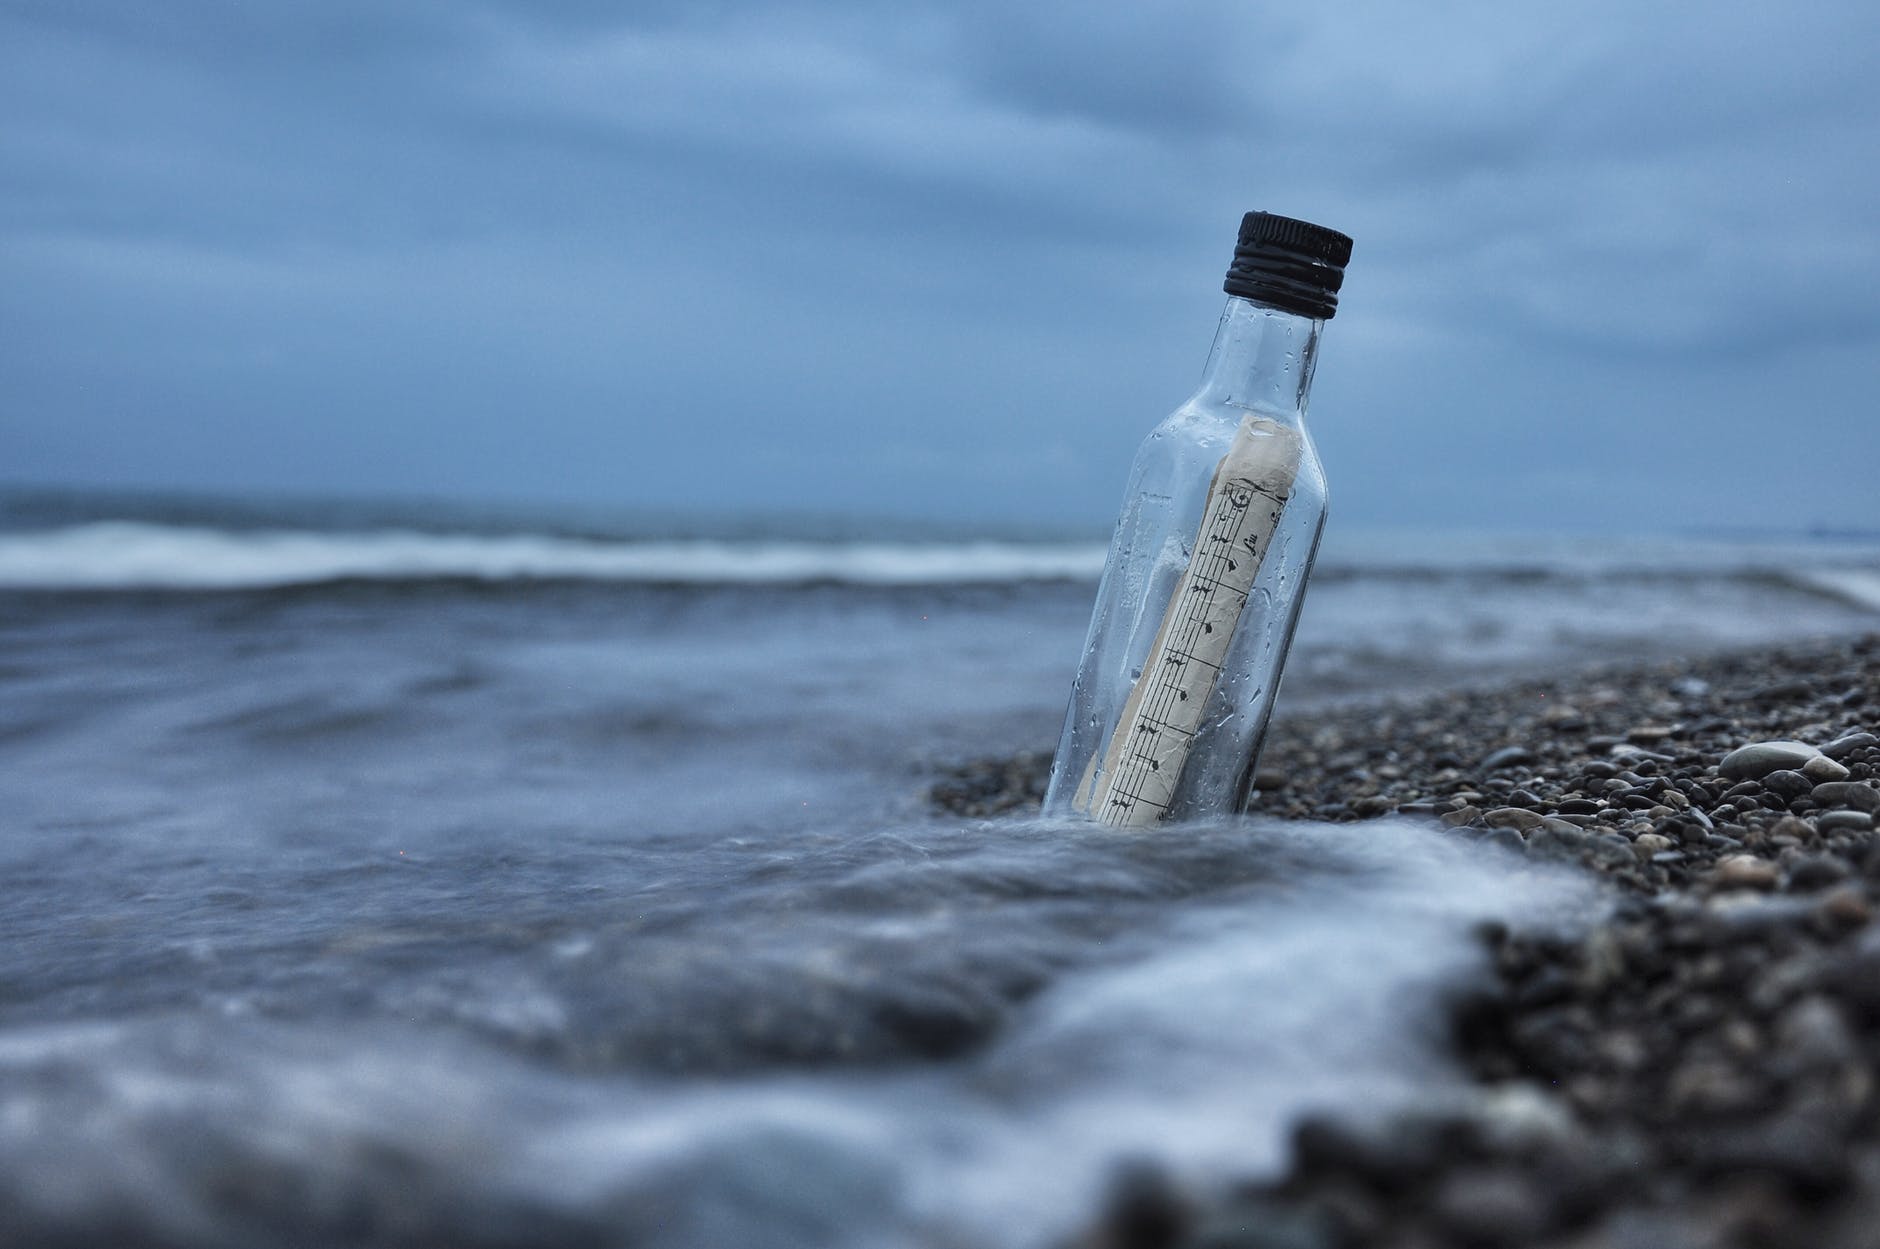 Message in a bottle on a shoreline